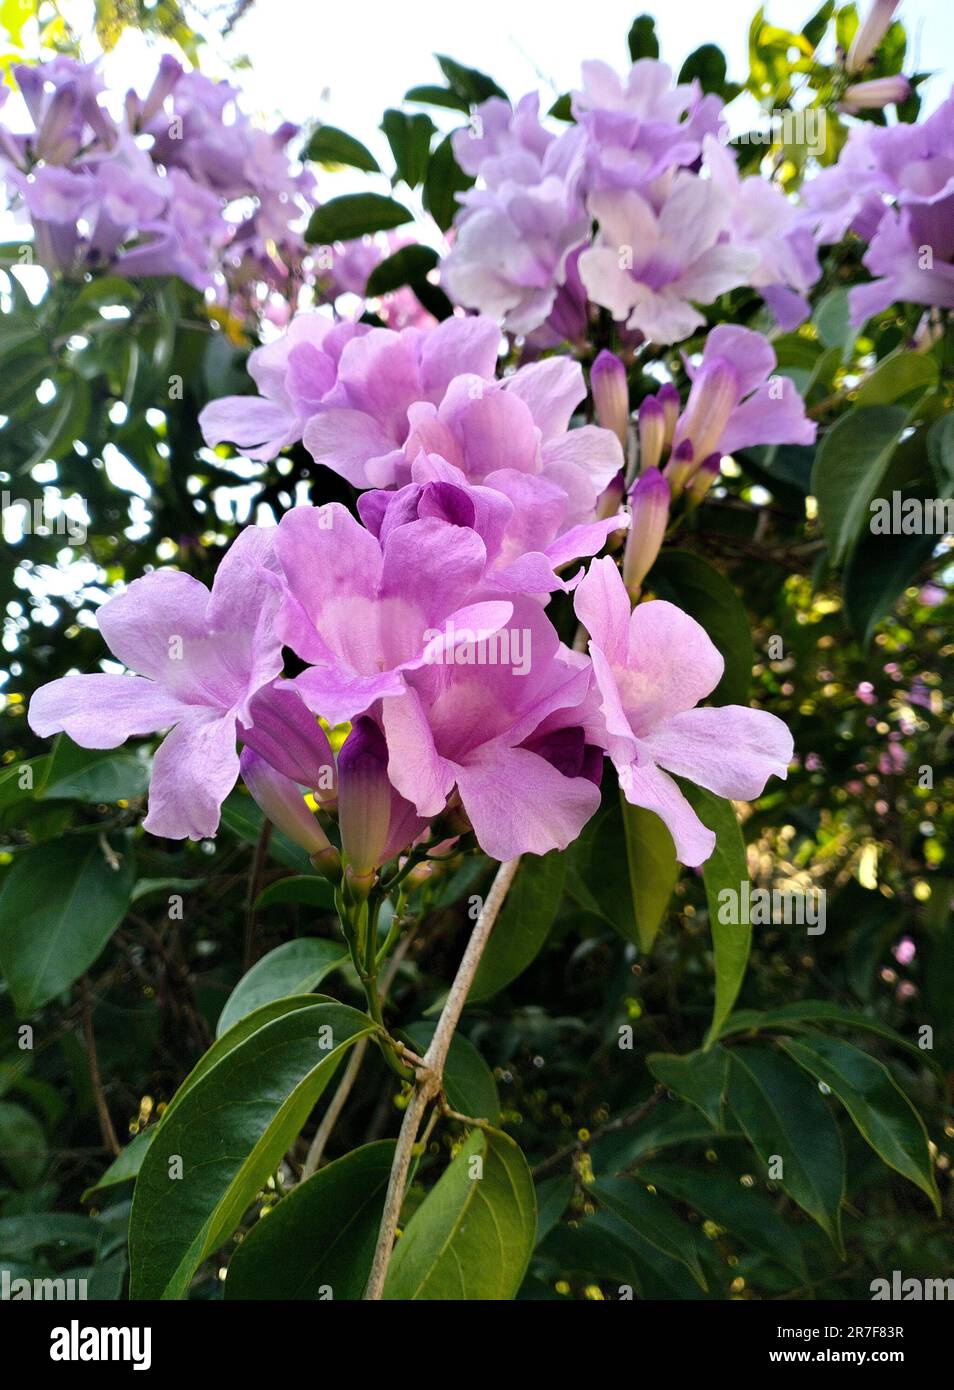 A beautiful cluster of pale purple flowers. Mansoa alliacea, garlic vine. Stock Photo